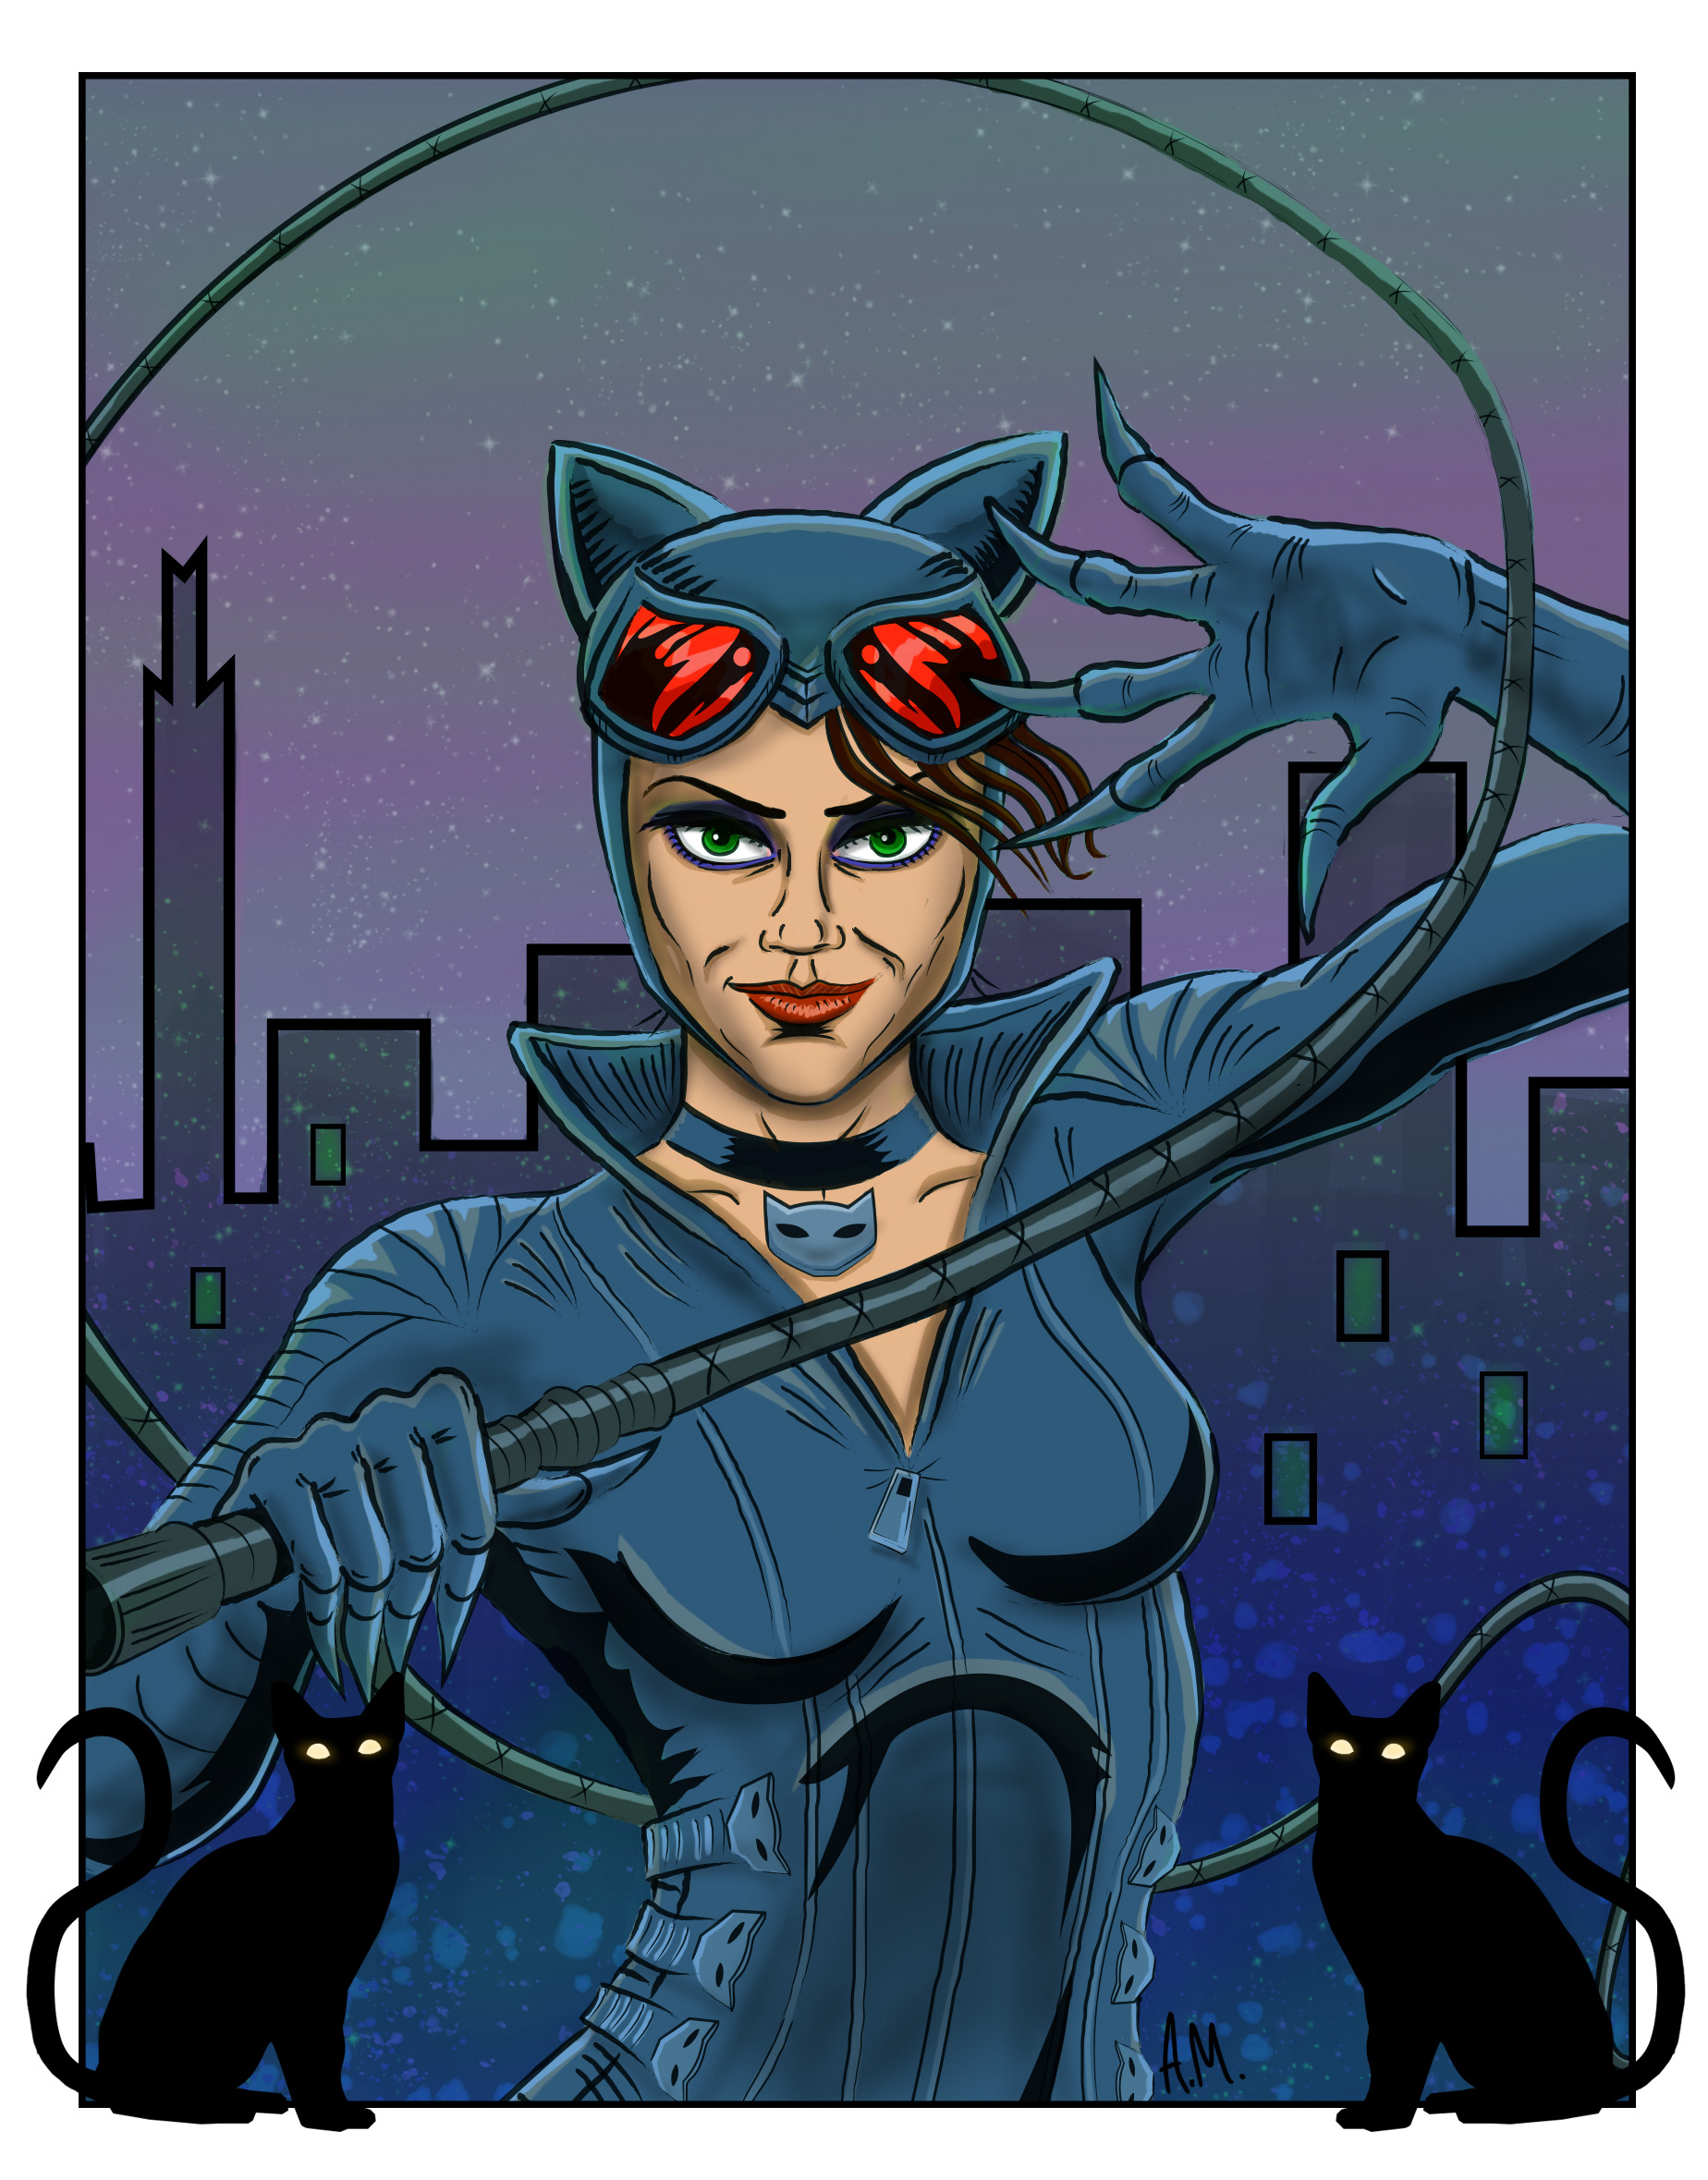 McKissen Illustrations - Catwoman Fan Art